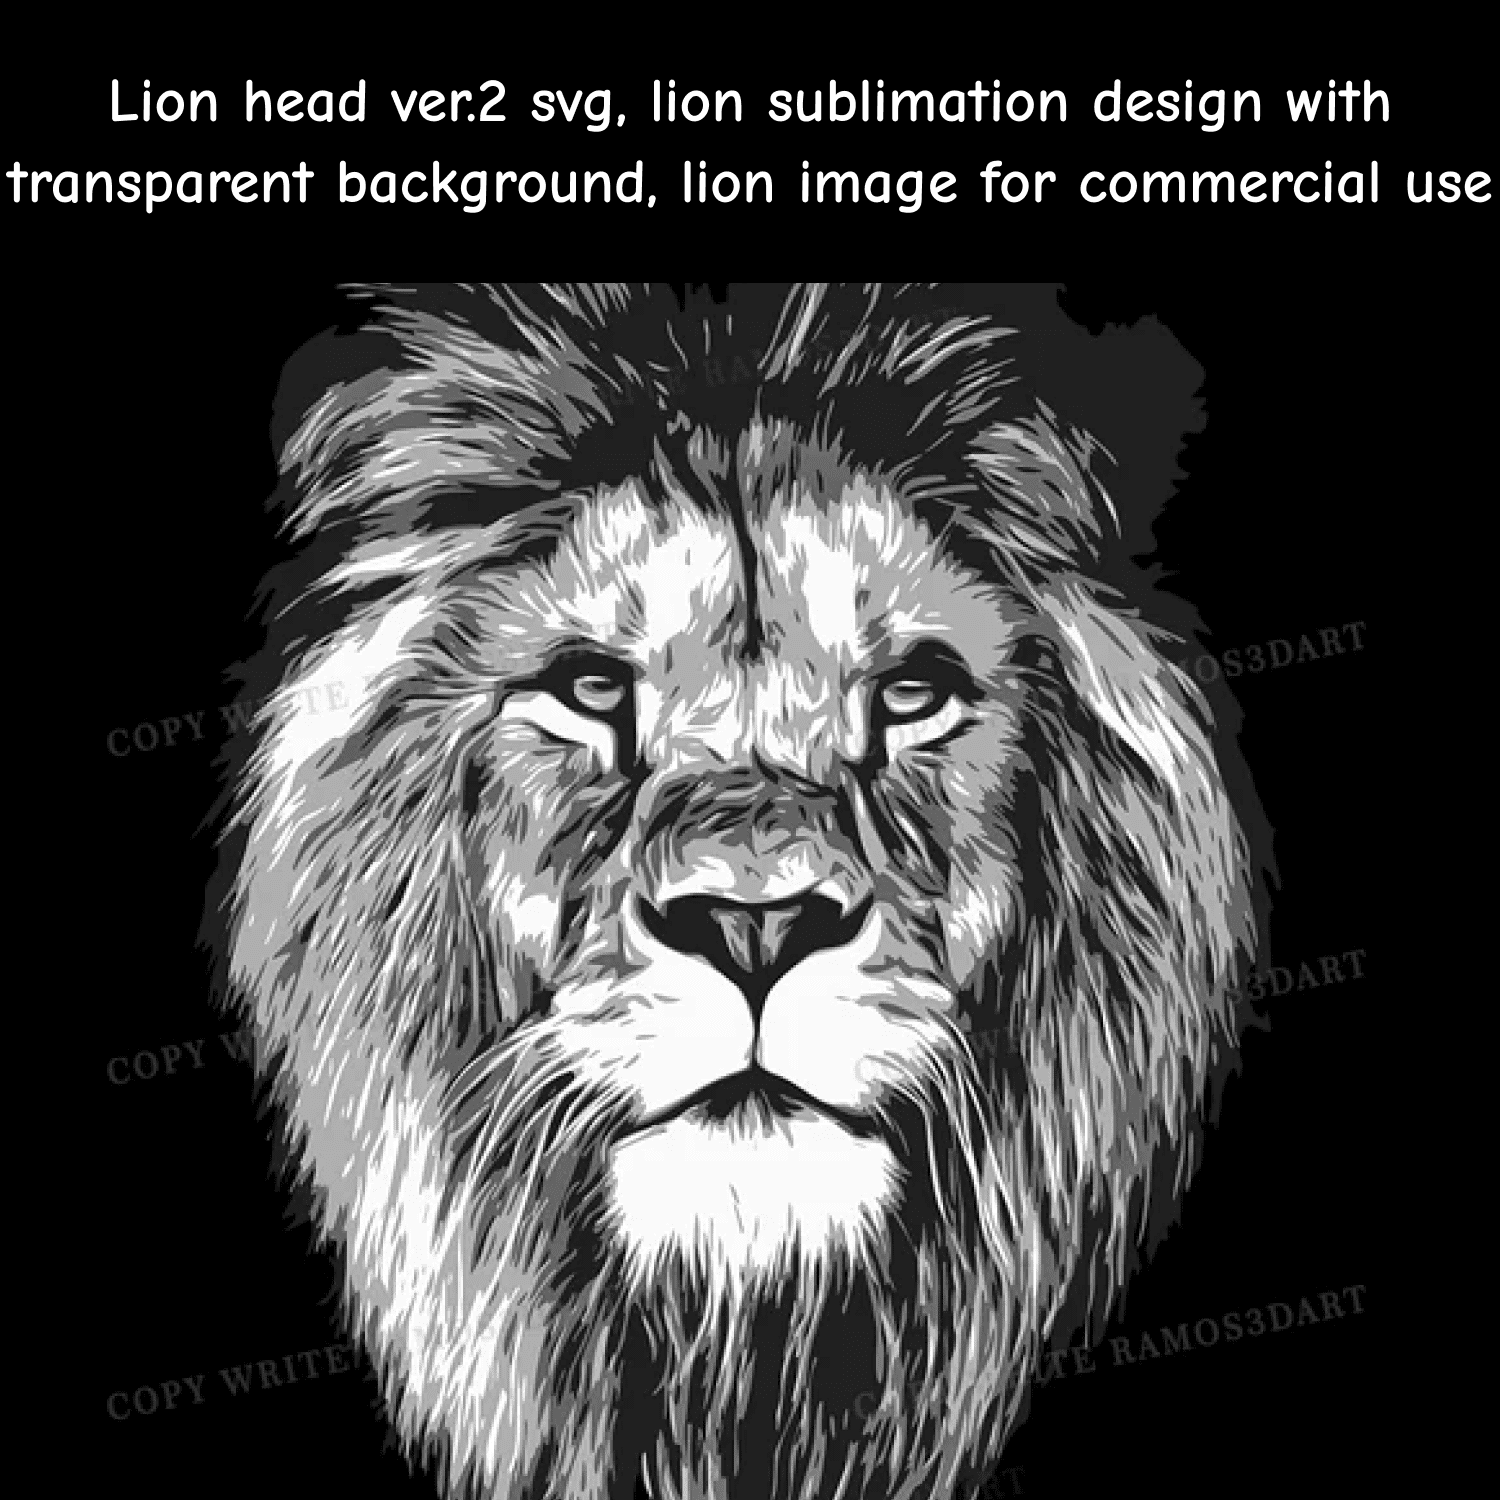 lion sublimation design with transparent background main cover.